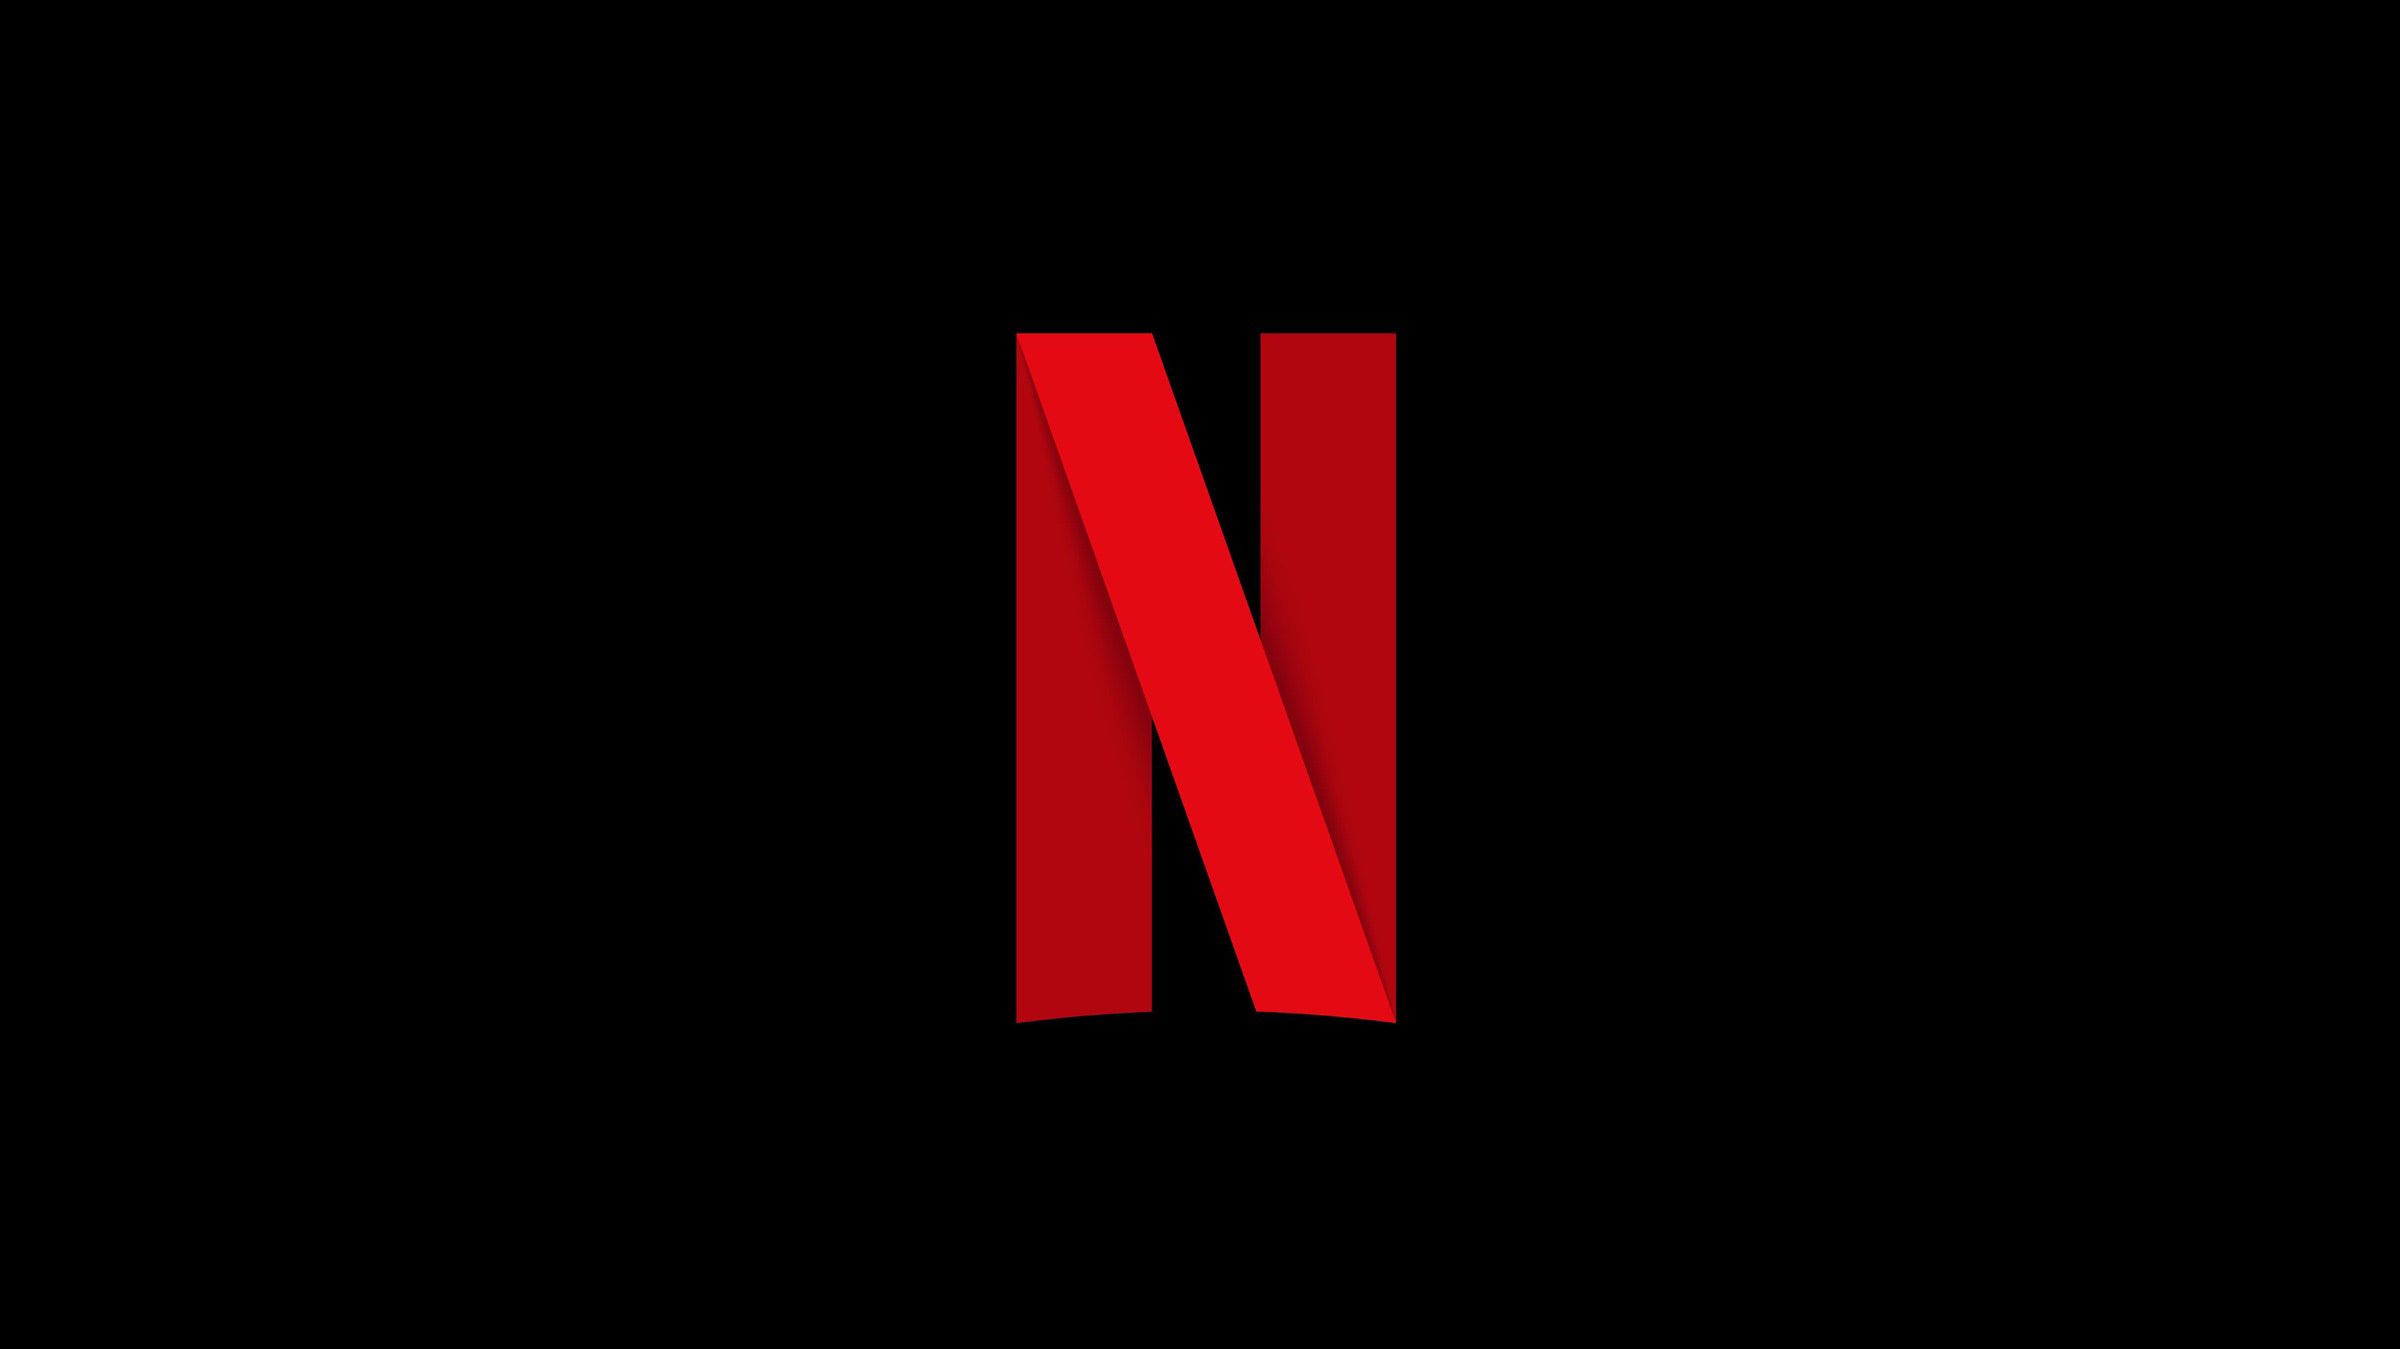 The Chosen One: Season 1 Review, Brazilian Netflix Series